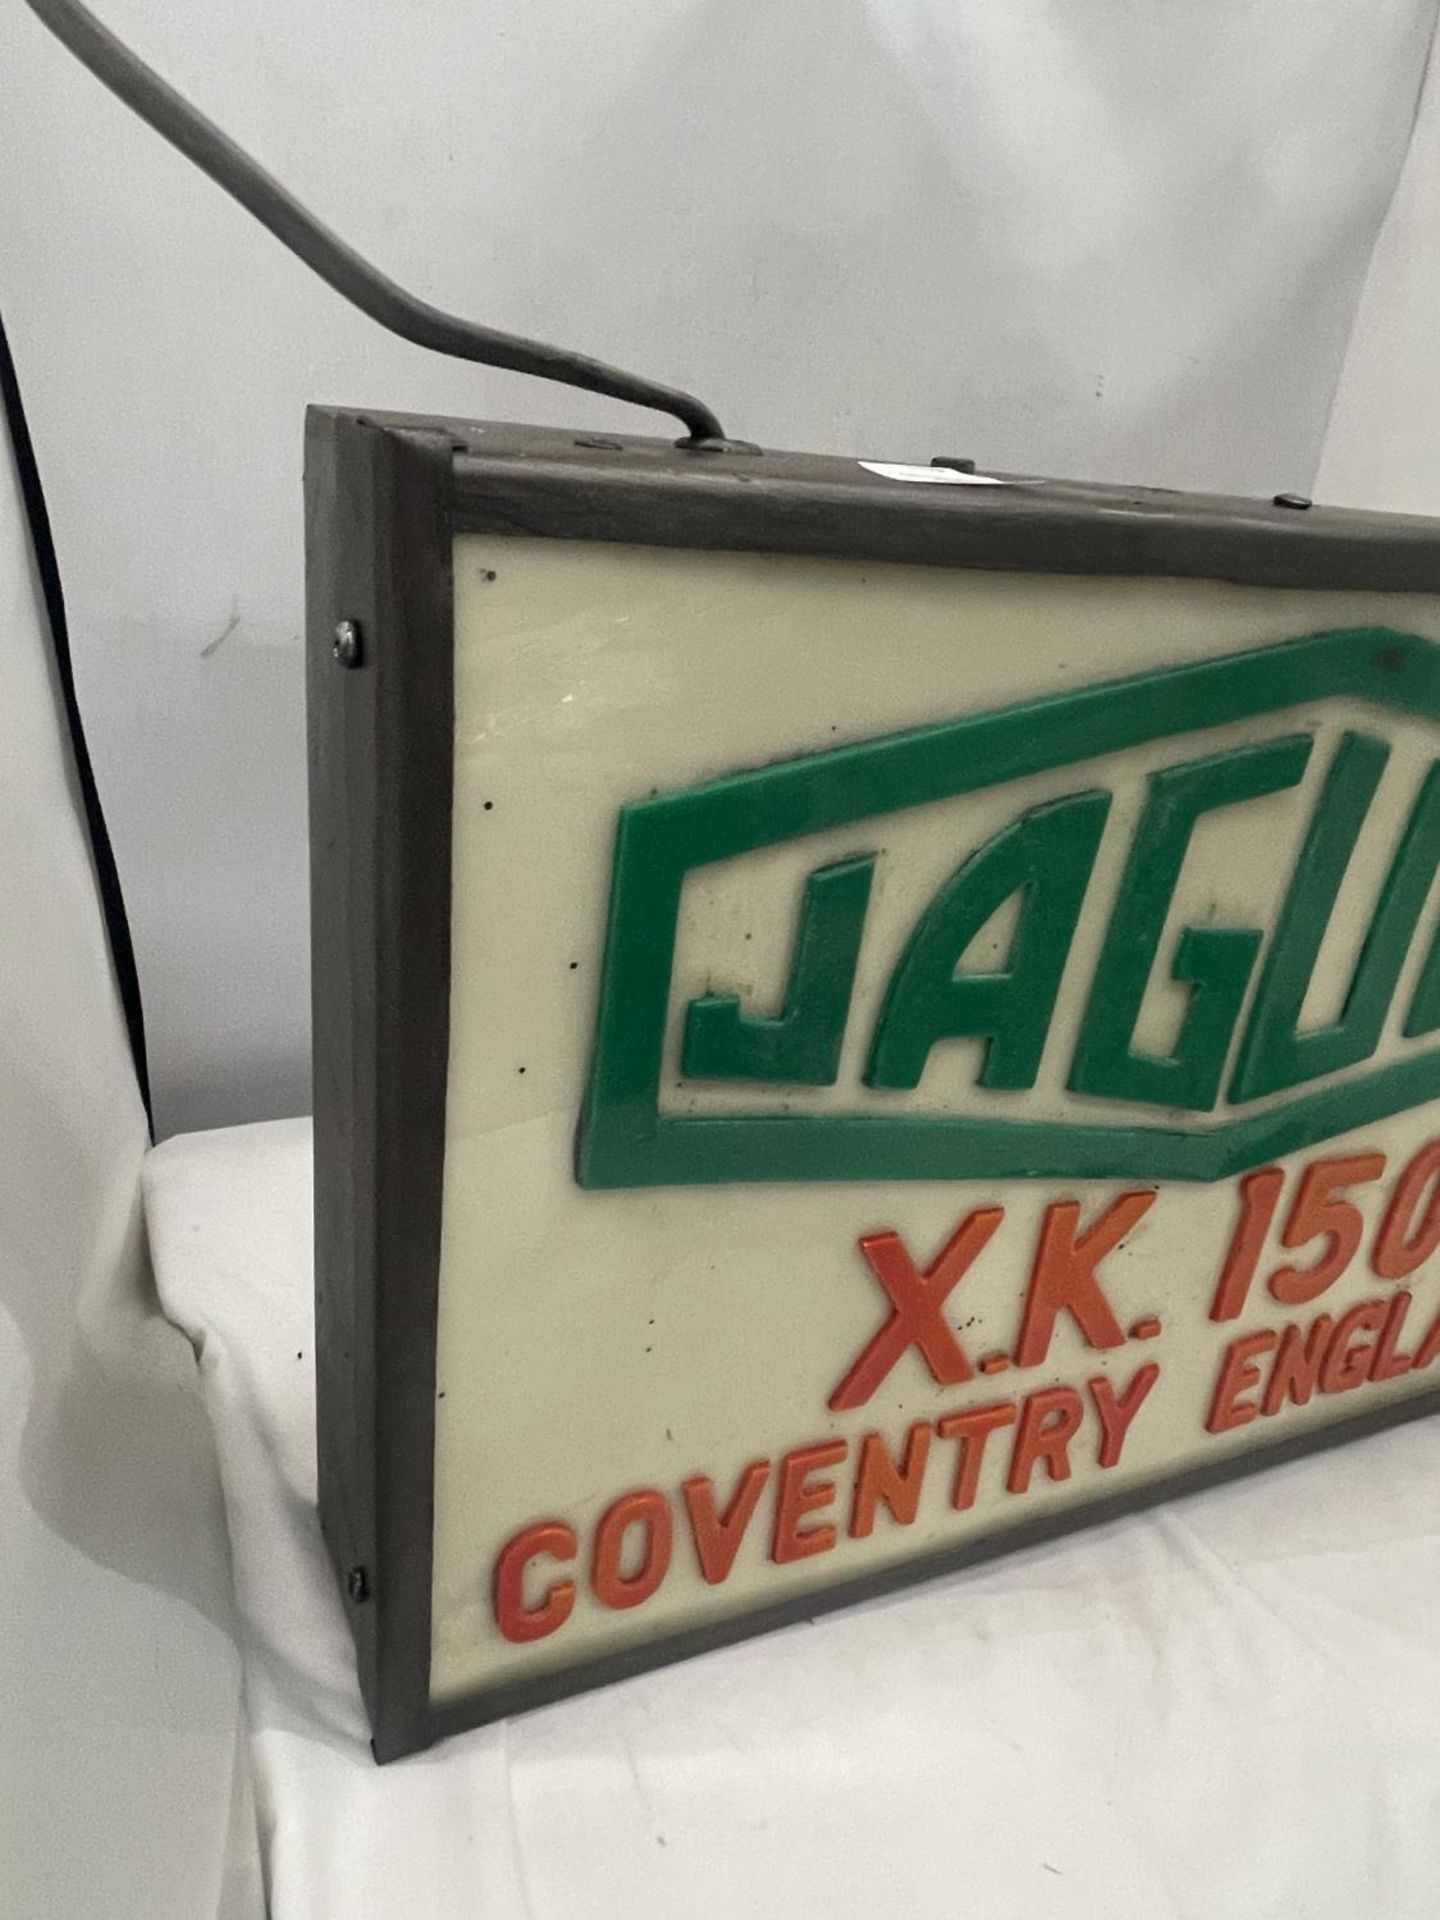 A JAGUAR X K 150 COVENTRY ENGLAND ILLUMINATED LIGHT BOX SIGN 53CM X 34CM - Bild 3 aus 4